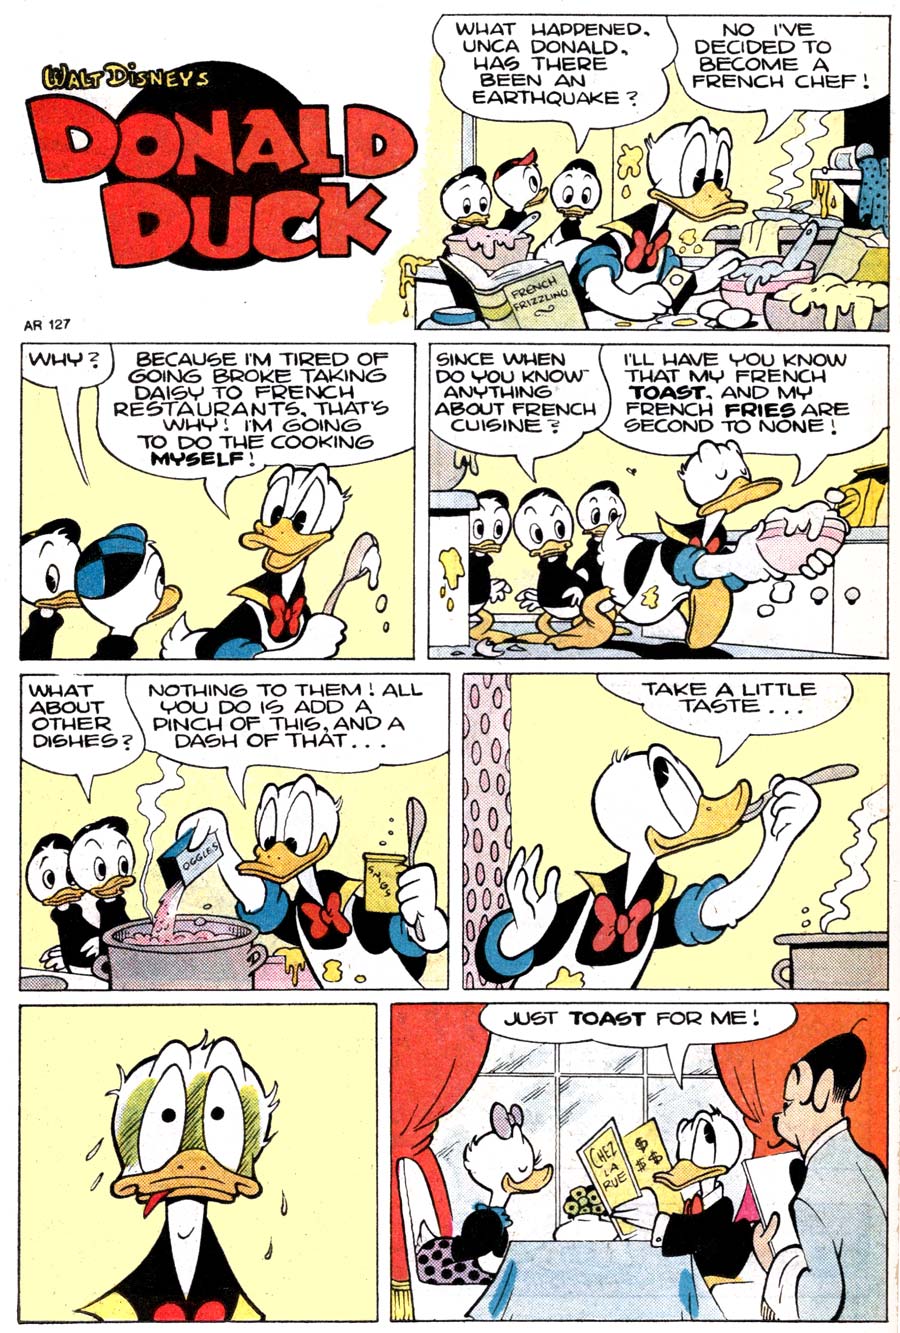 donald duck comic strip girlfriend